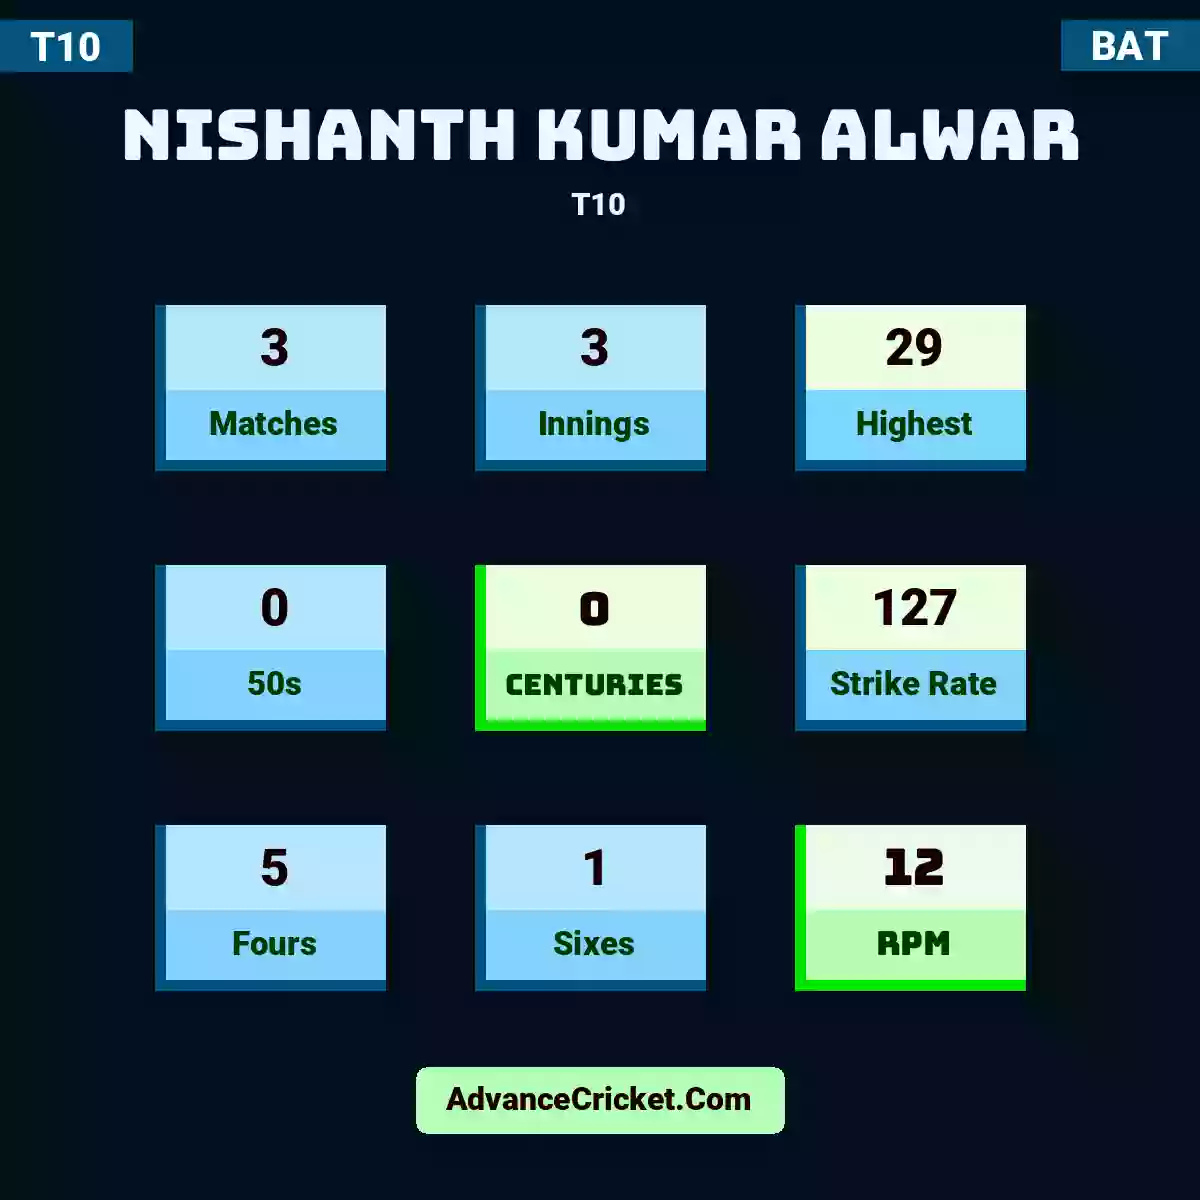 Nishanth Kumar Alwar T10 , Nishanth Kumar Alwar played 3 matches, scored 29 runs as highest, 0 half-centuries, and 0 centuries, with a strike rate of 127. N.Kumar.Alwar hit 5 fours and 1 sixes, with an RPM of 12.